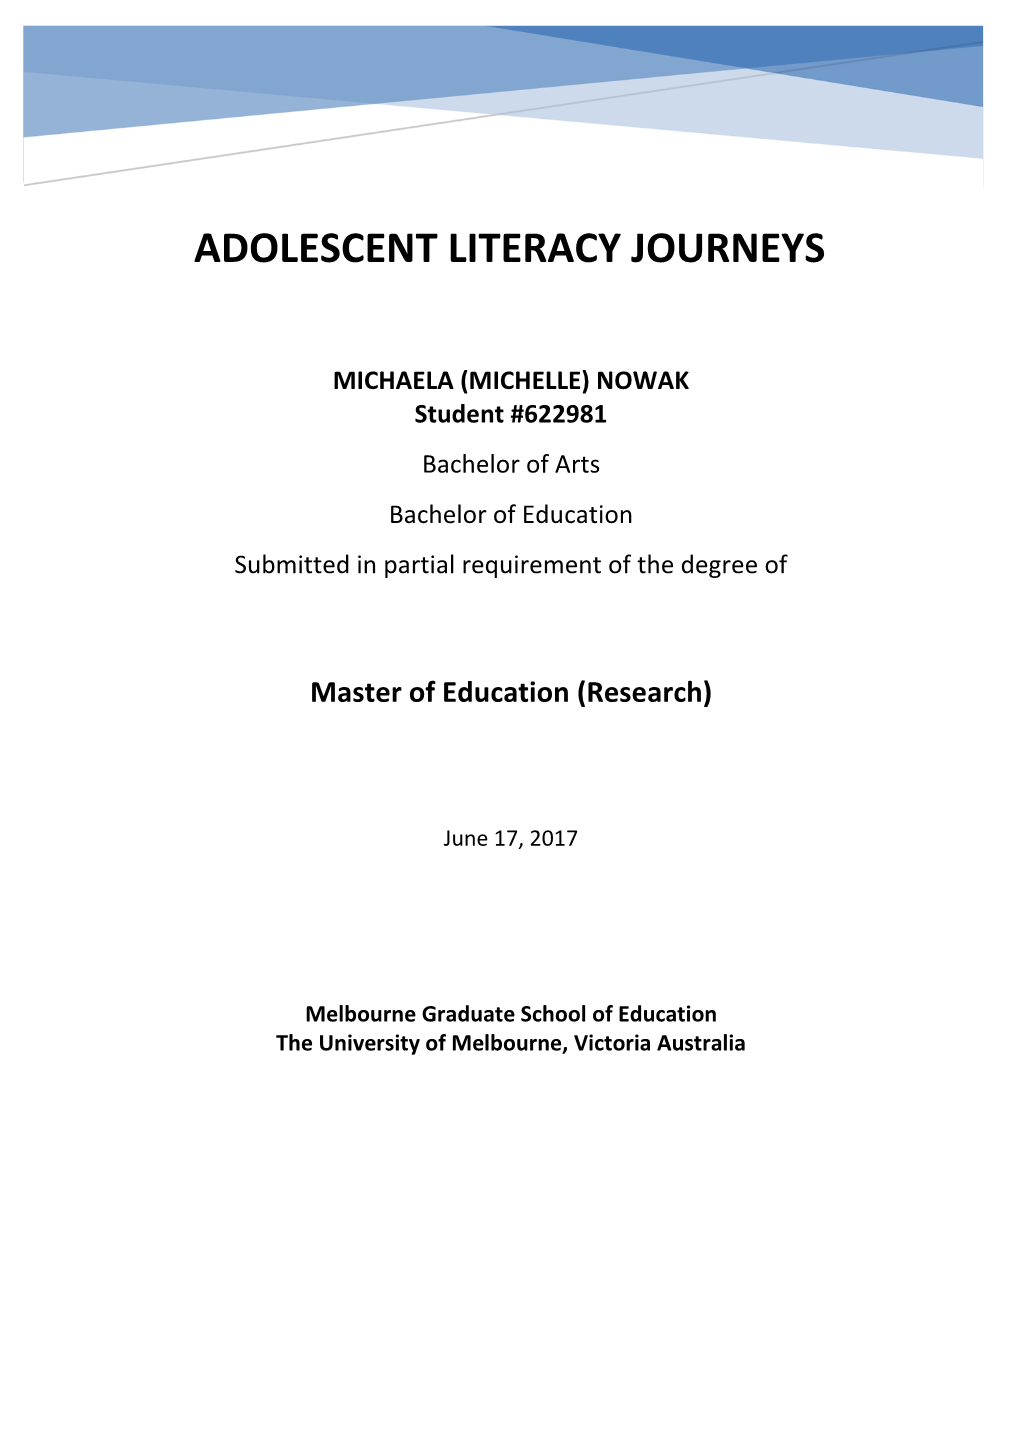 Adolescent Literacy Journeys